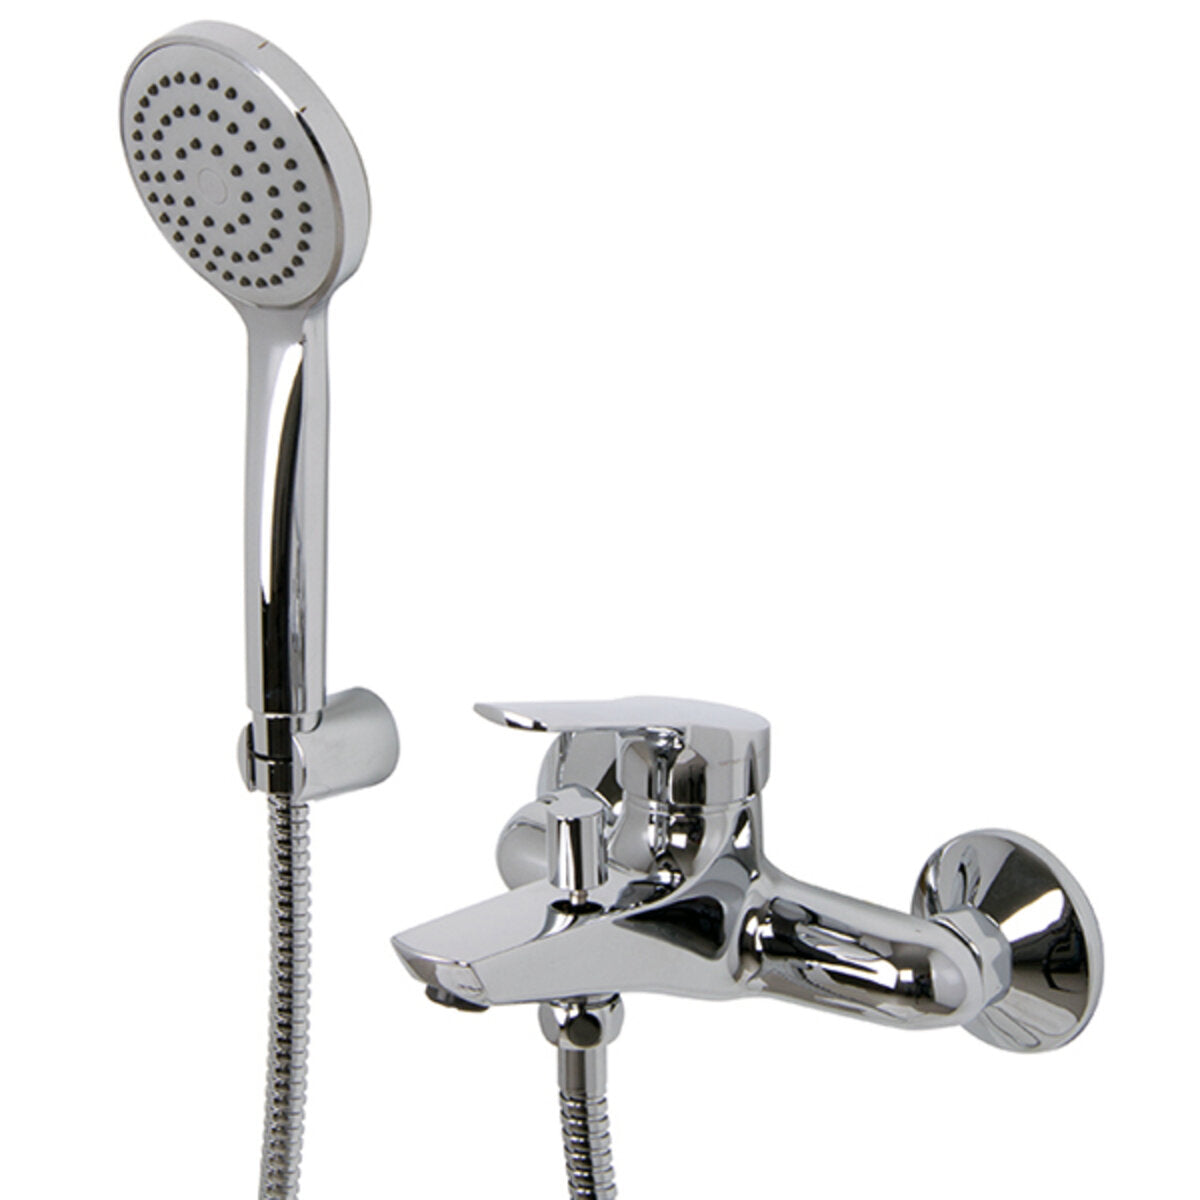 Fima Carlo Frattini series 4 external two-way diverter bath mixer with shower set